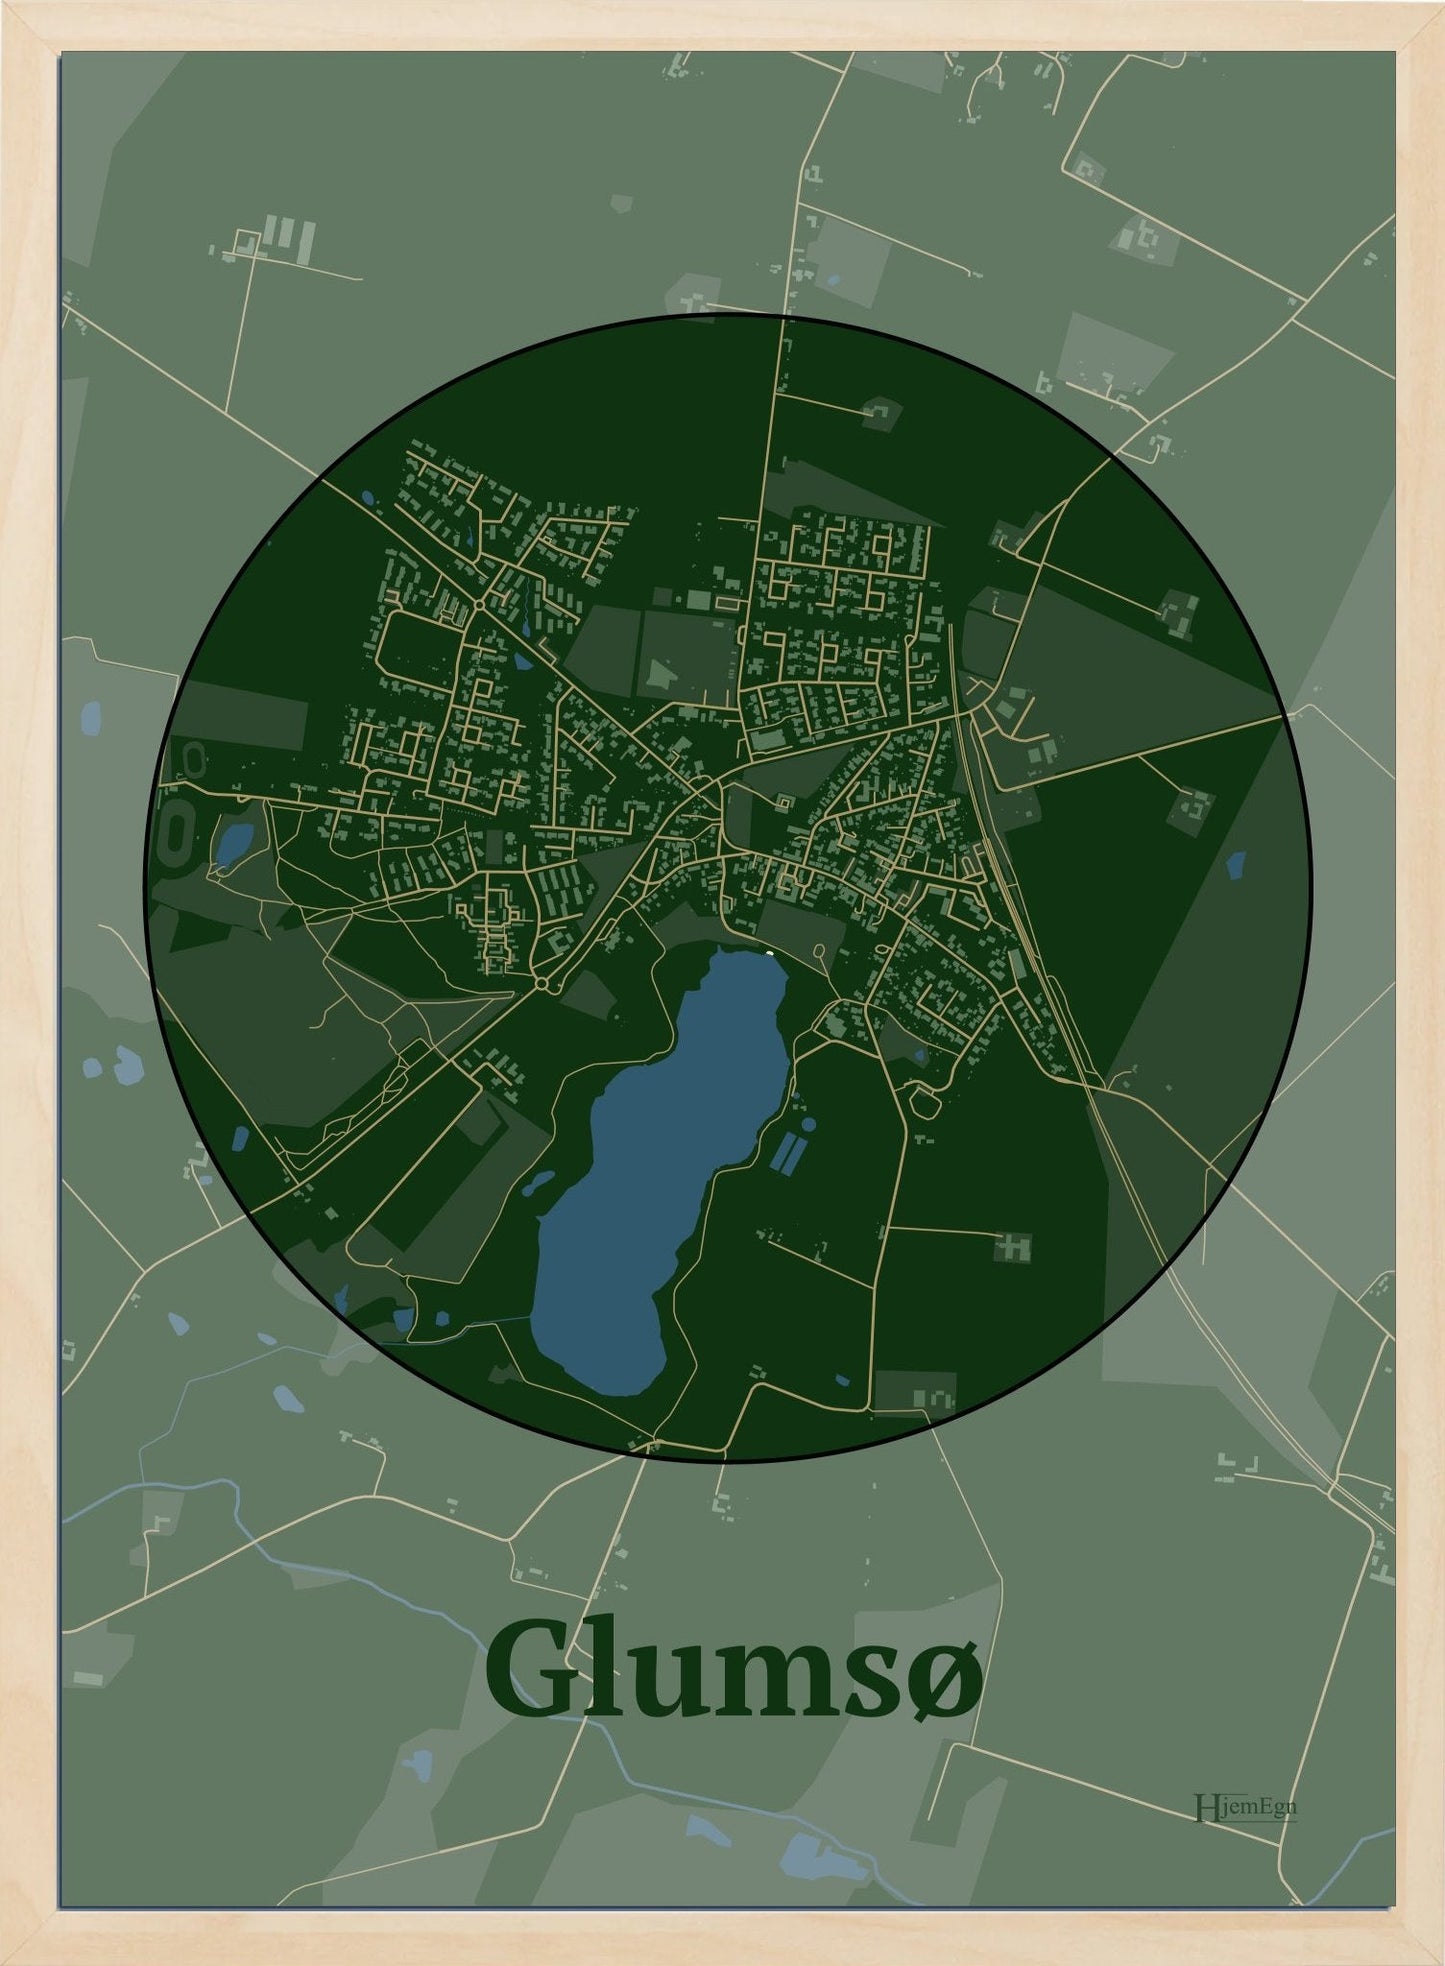 Glumsø plakat i farve mørk grøn og HjemEgn.dk design centrum. Design bykort for Glumsø